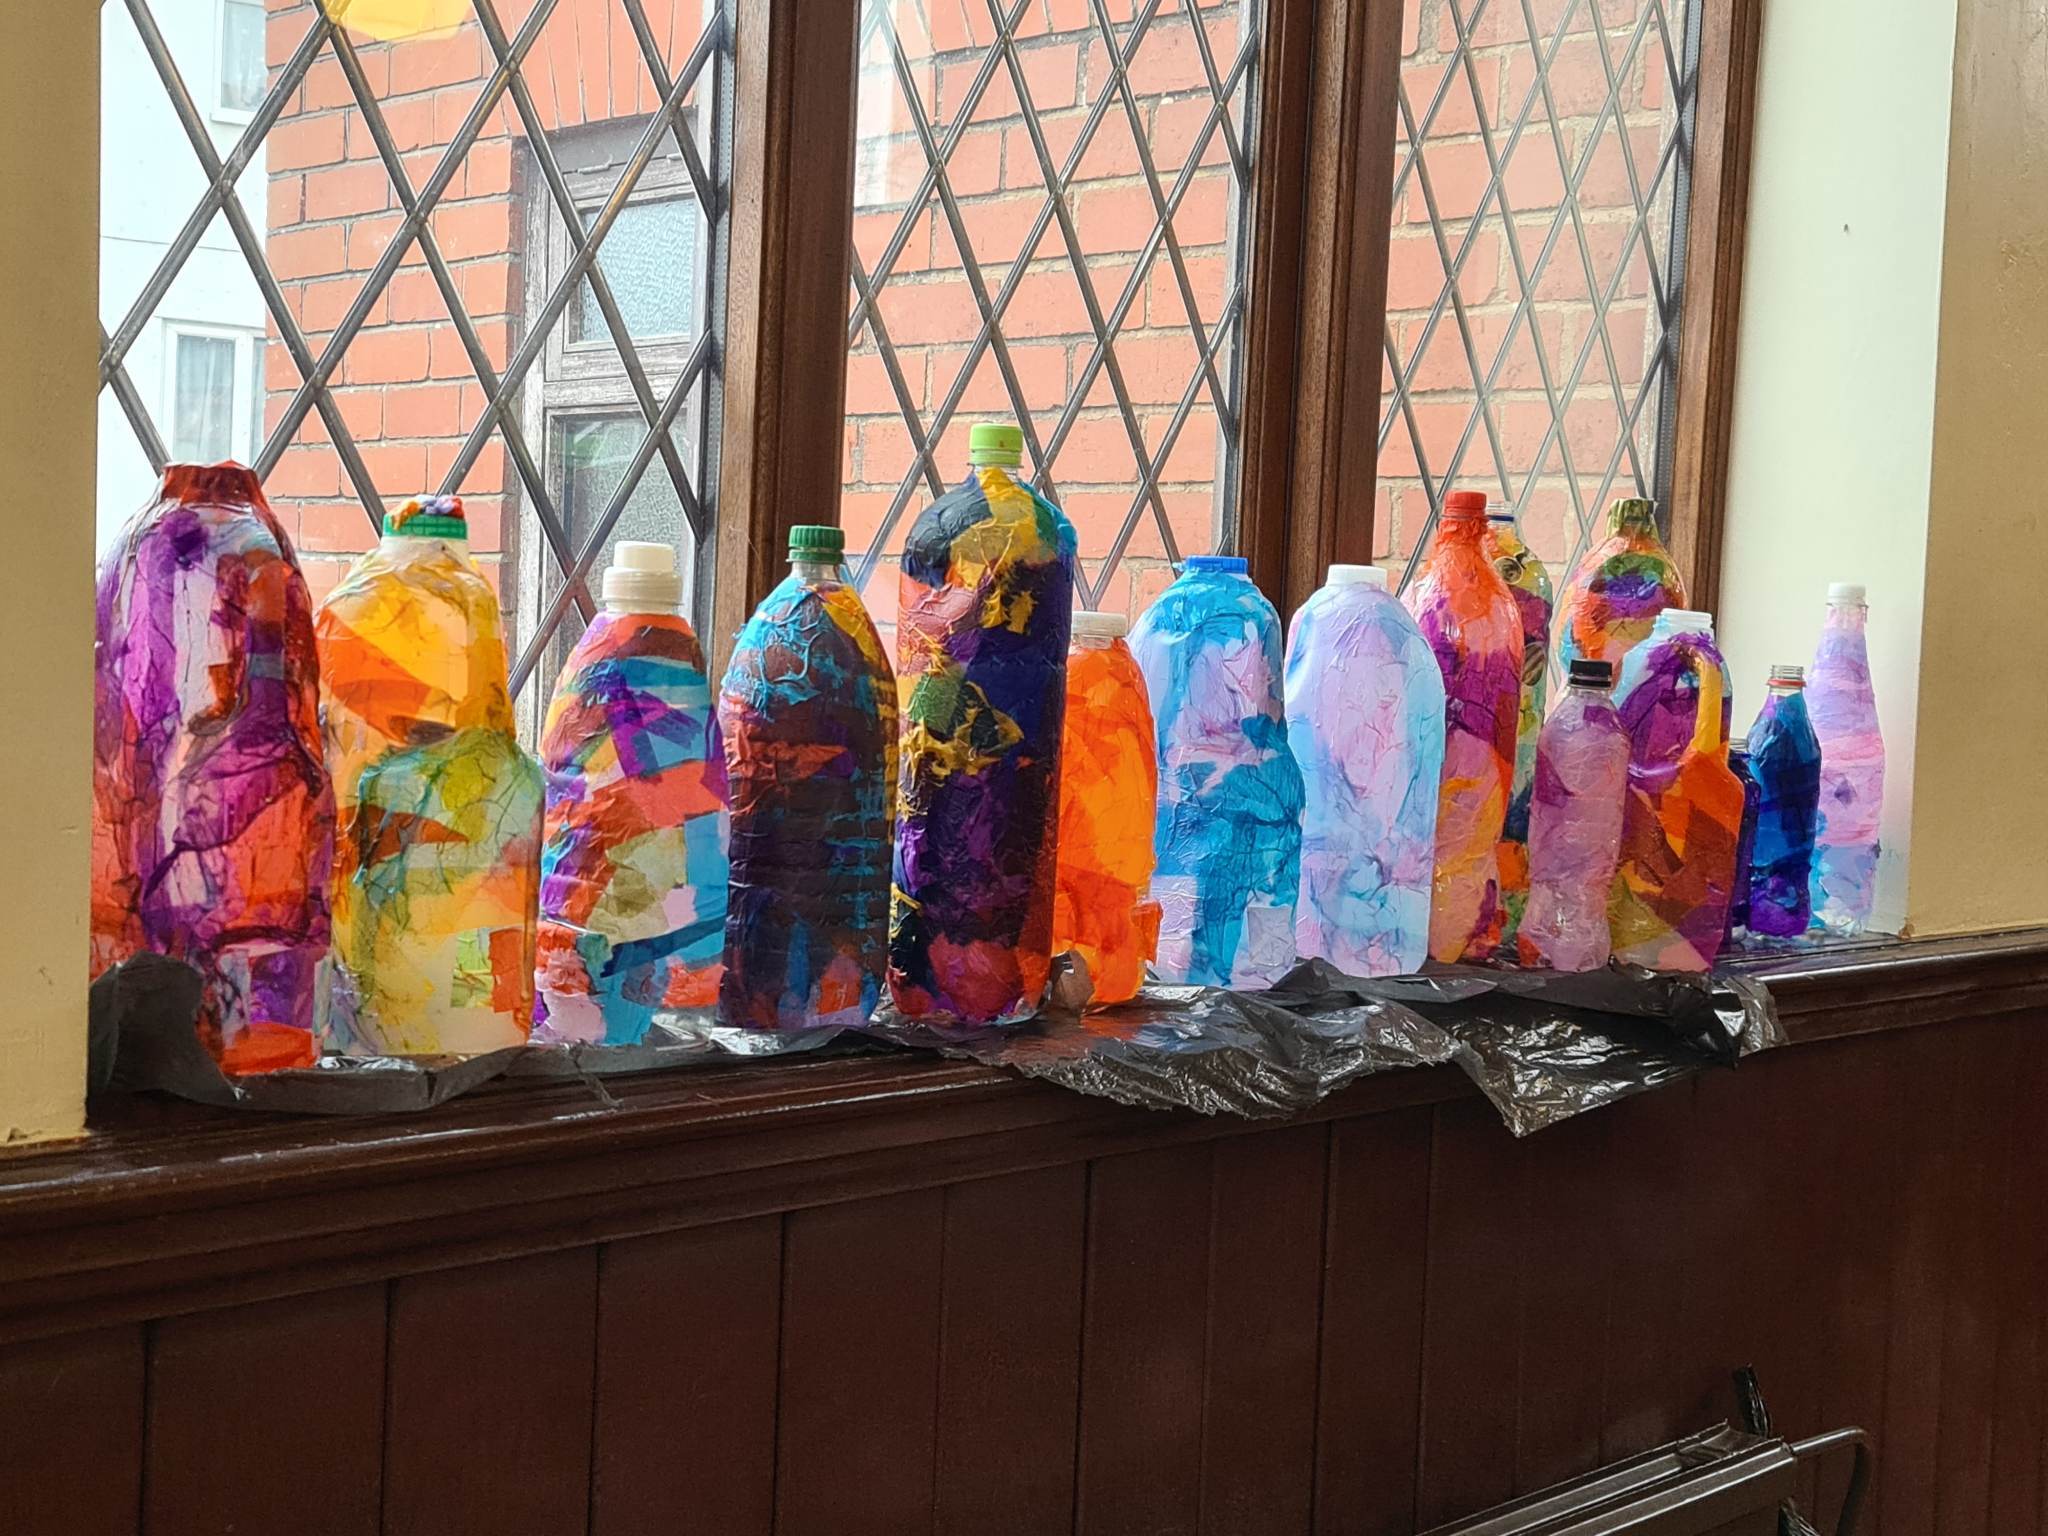 Some creative lanterns made for the parade.